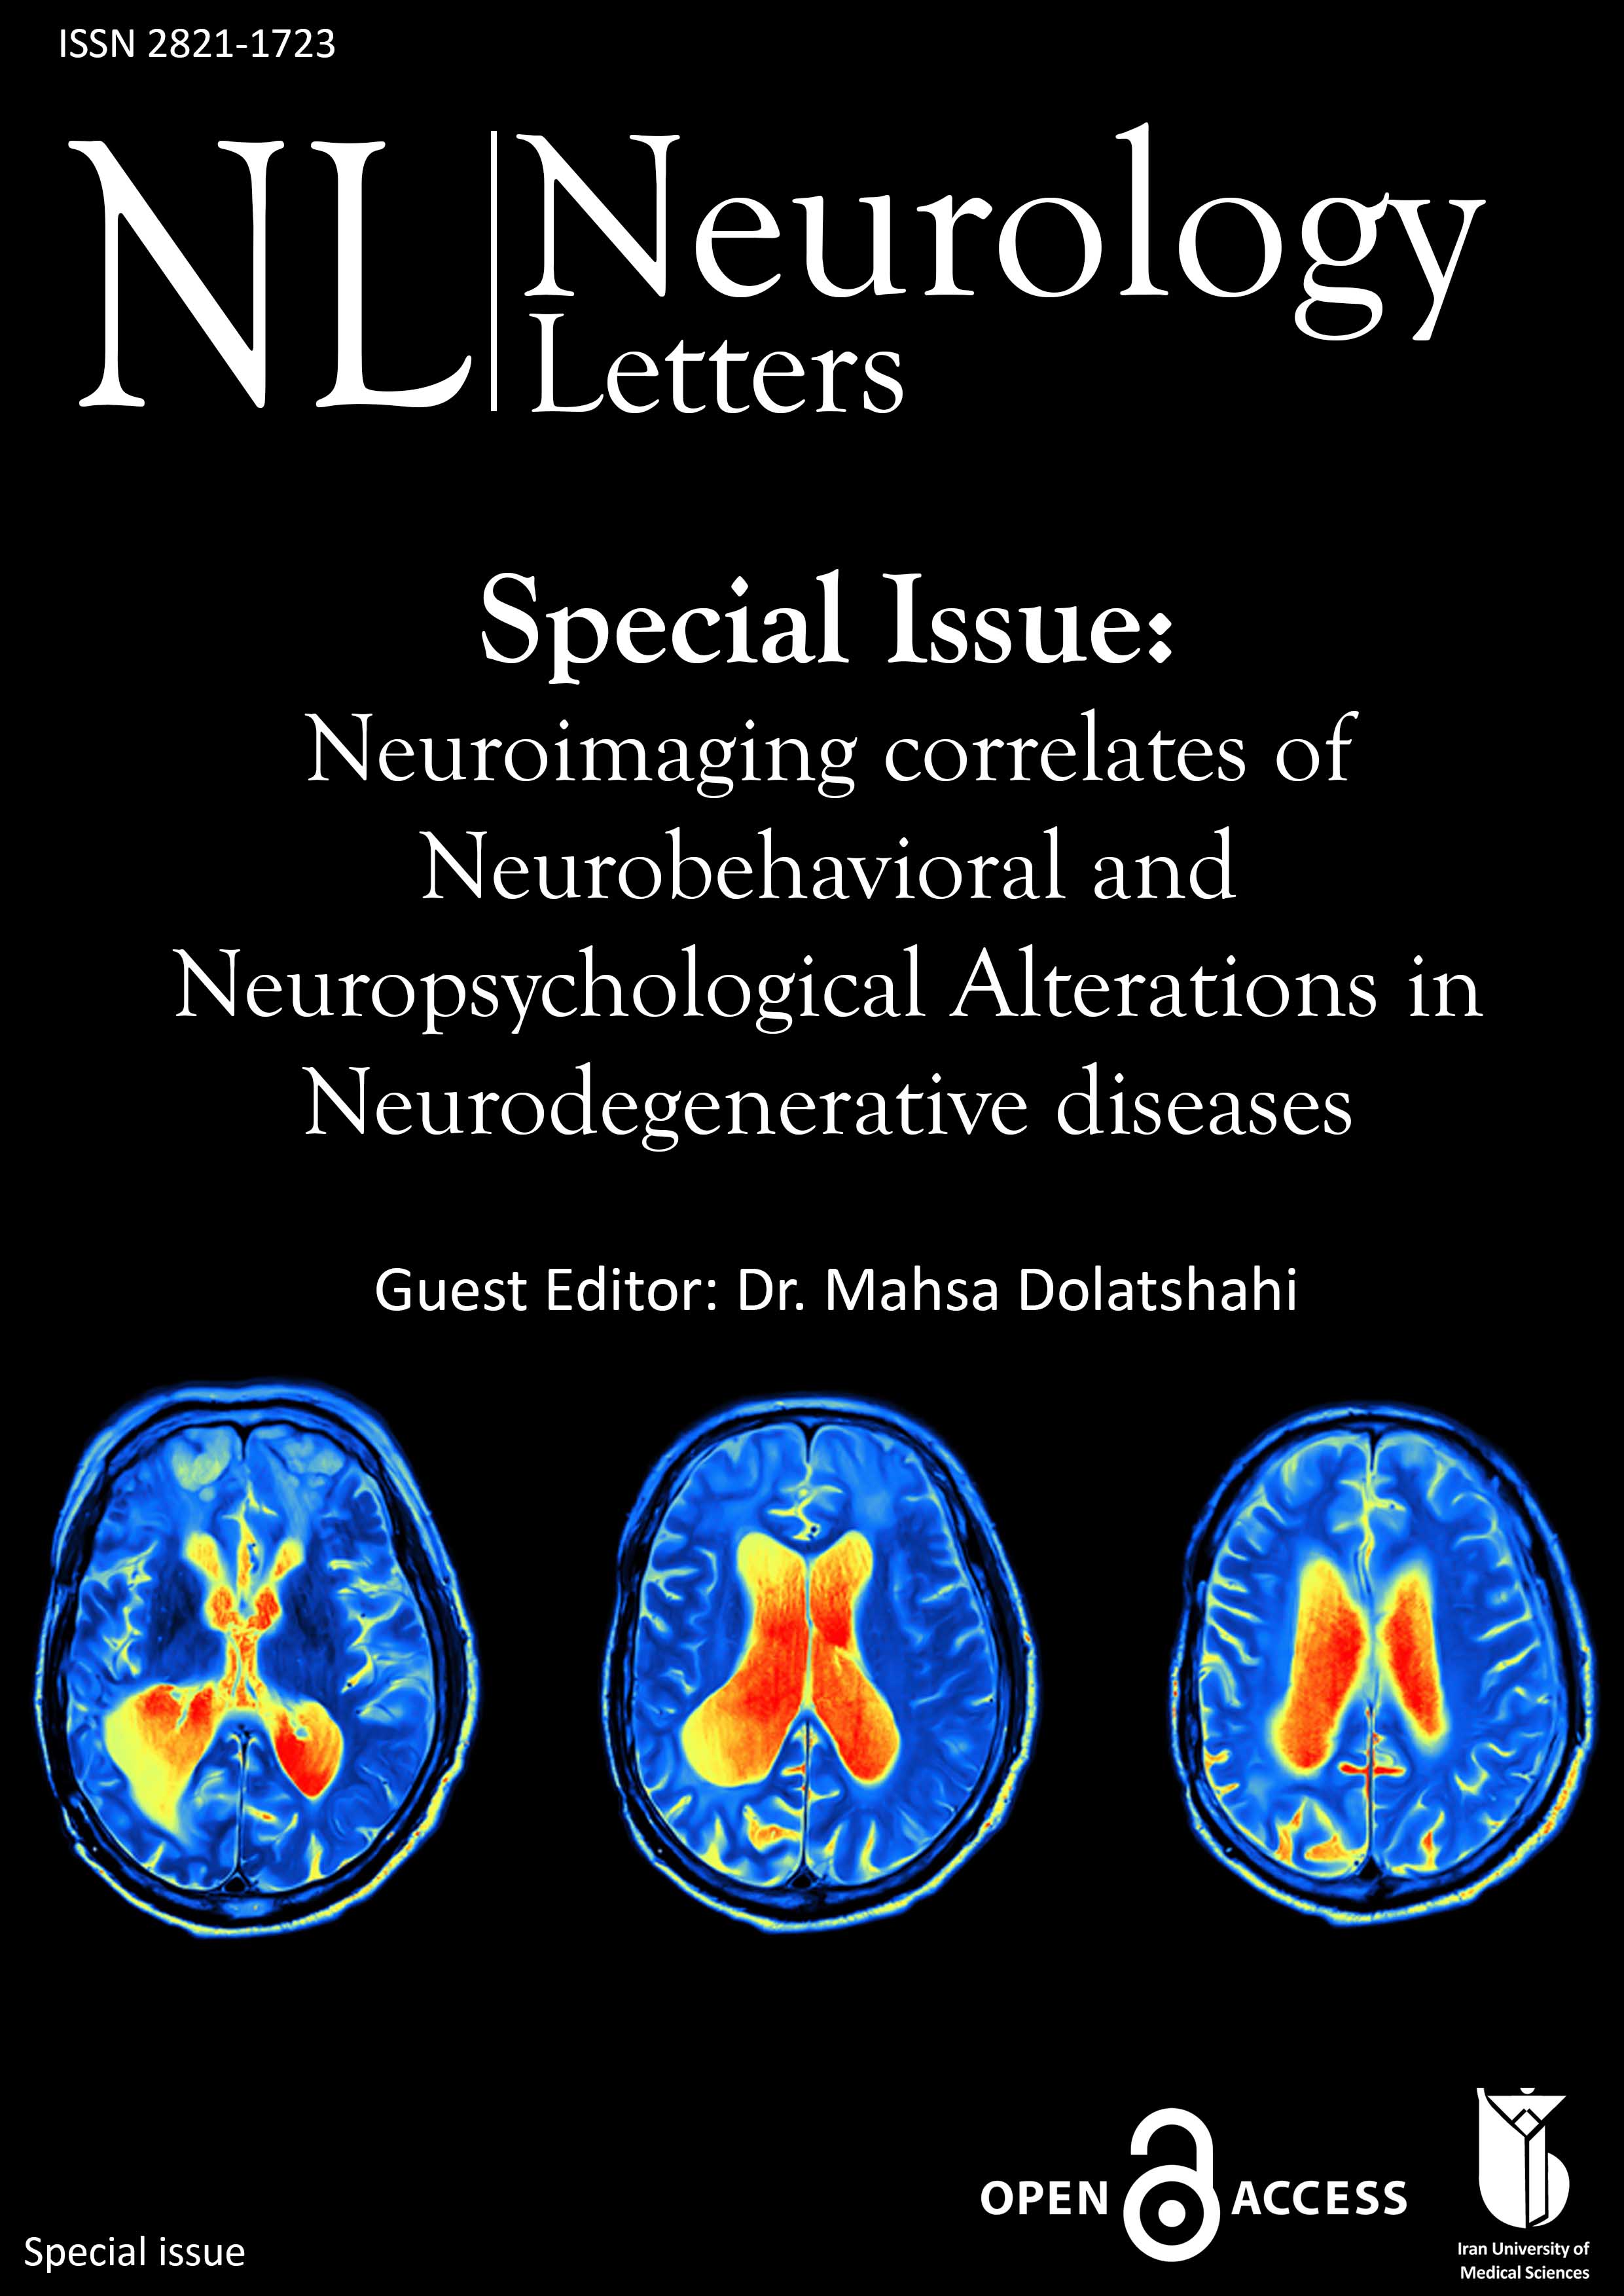 Special Issue: Neuroimaging Correlates of Neurobehavioral and Neuropsychiatric Alterations in Neurodegenerative diseases